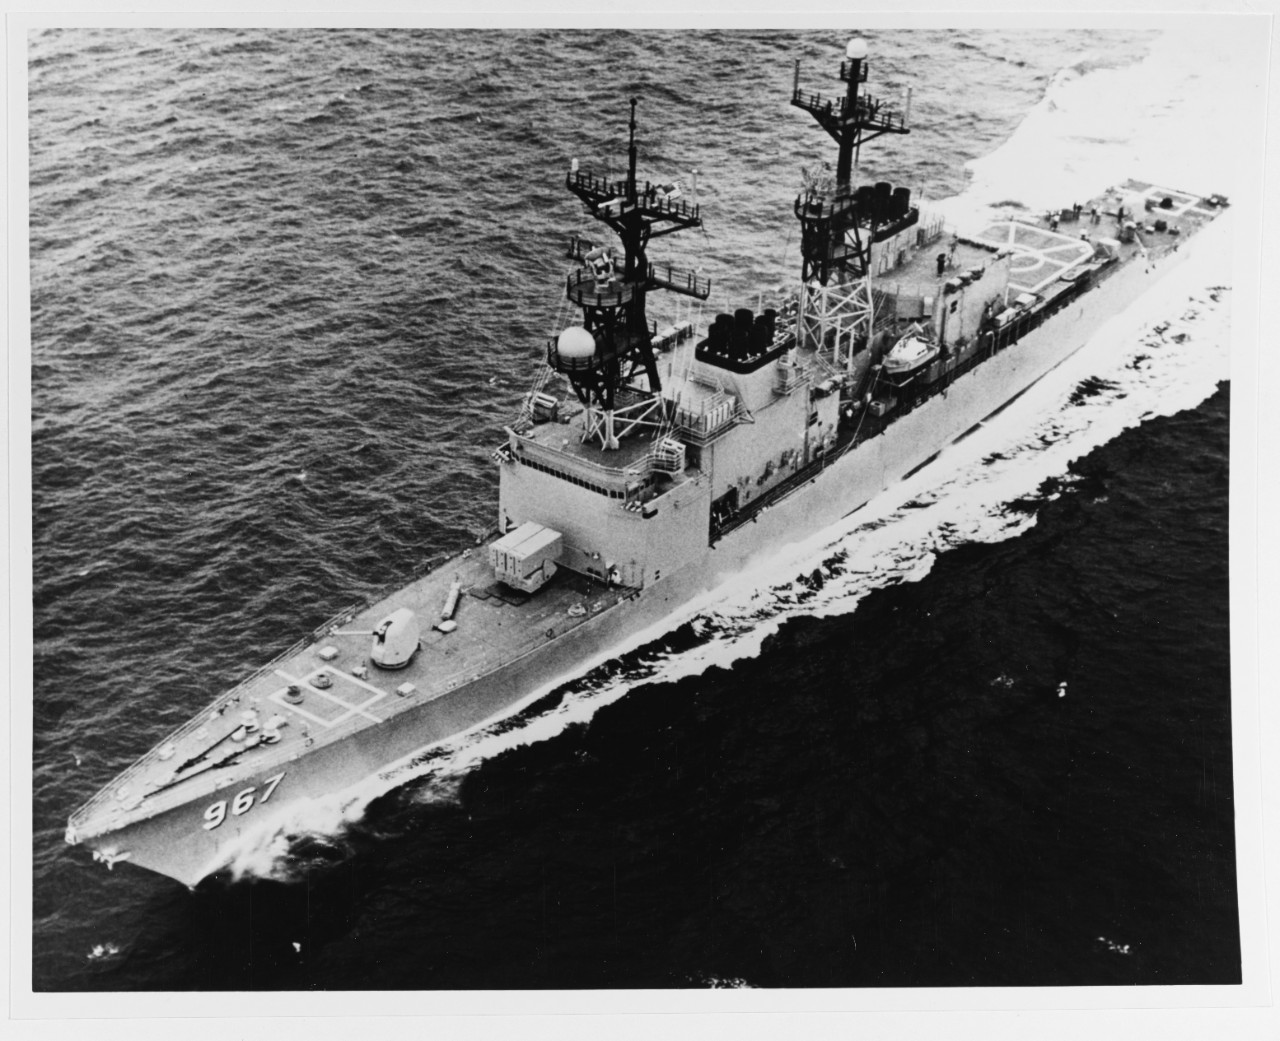 ca.1977 US Naval Destroyer USS ELLIOT DD 967 USN Navy Ship Print